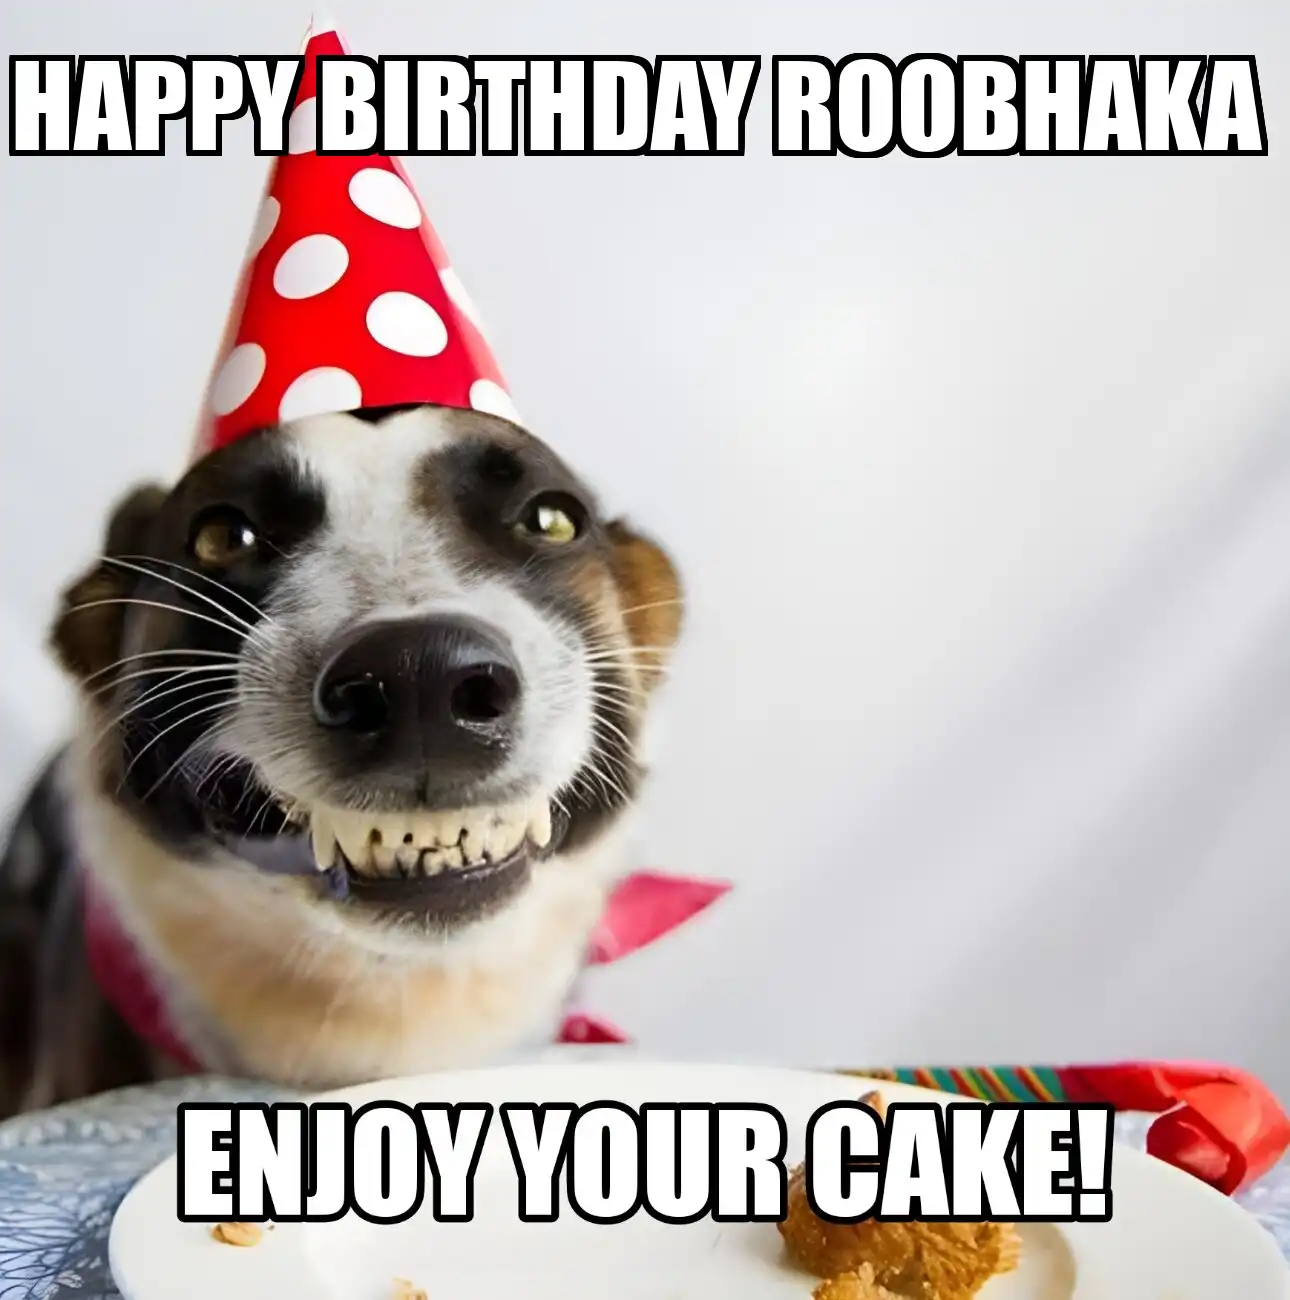 Happy Birthday Roobhaka Enjoy Your Cake Dog Meme